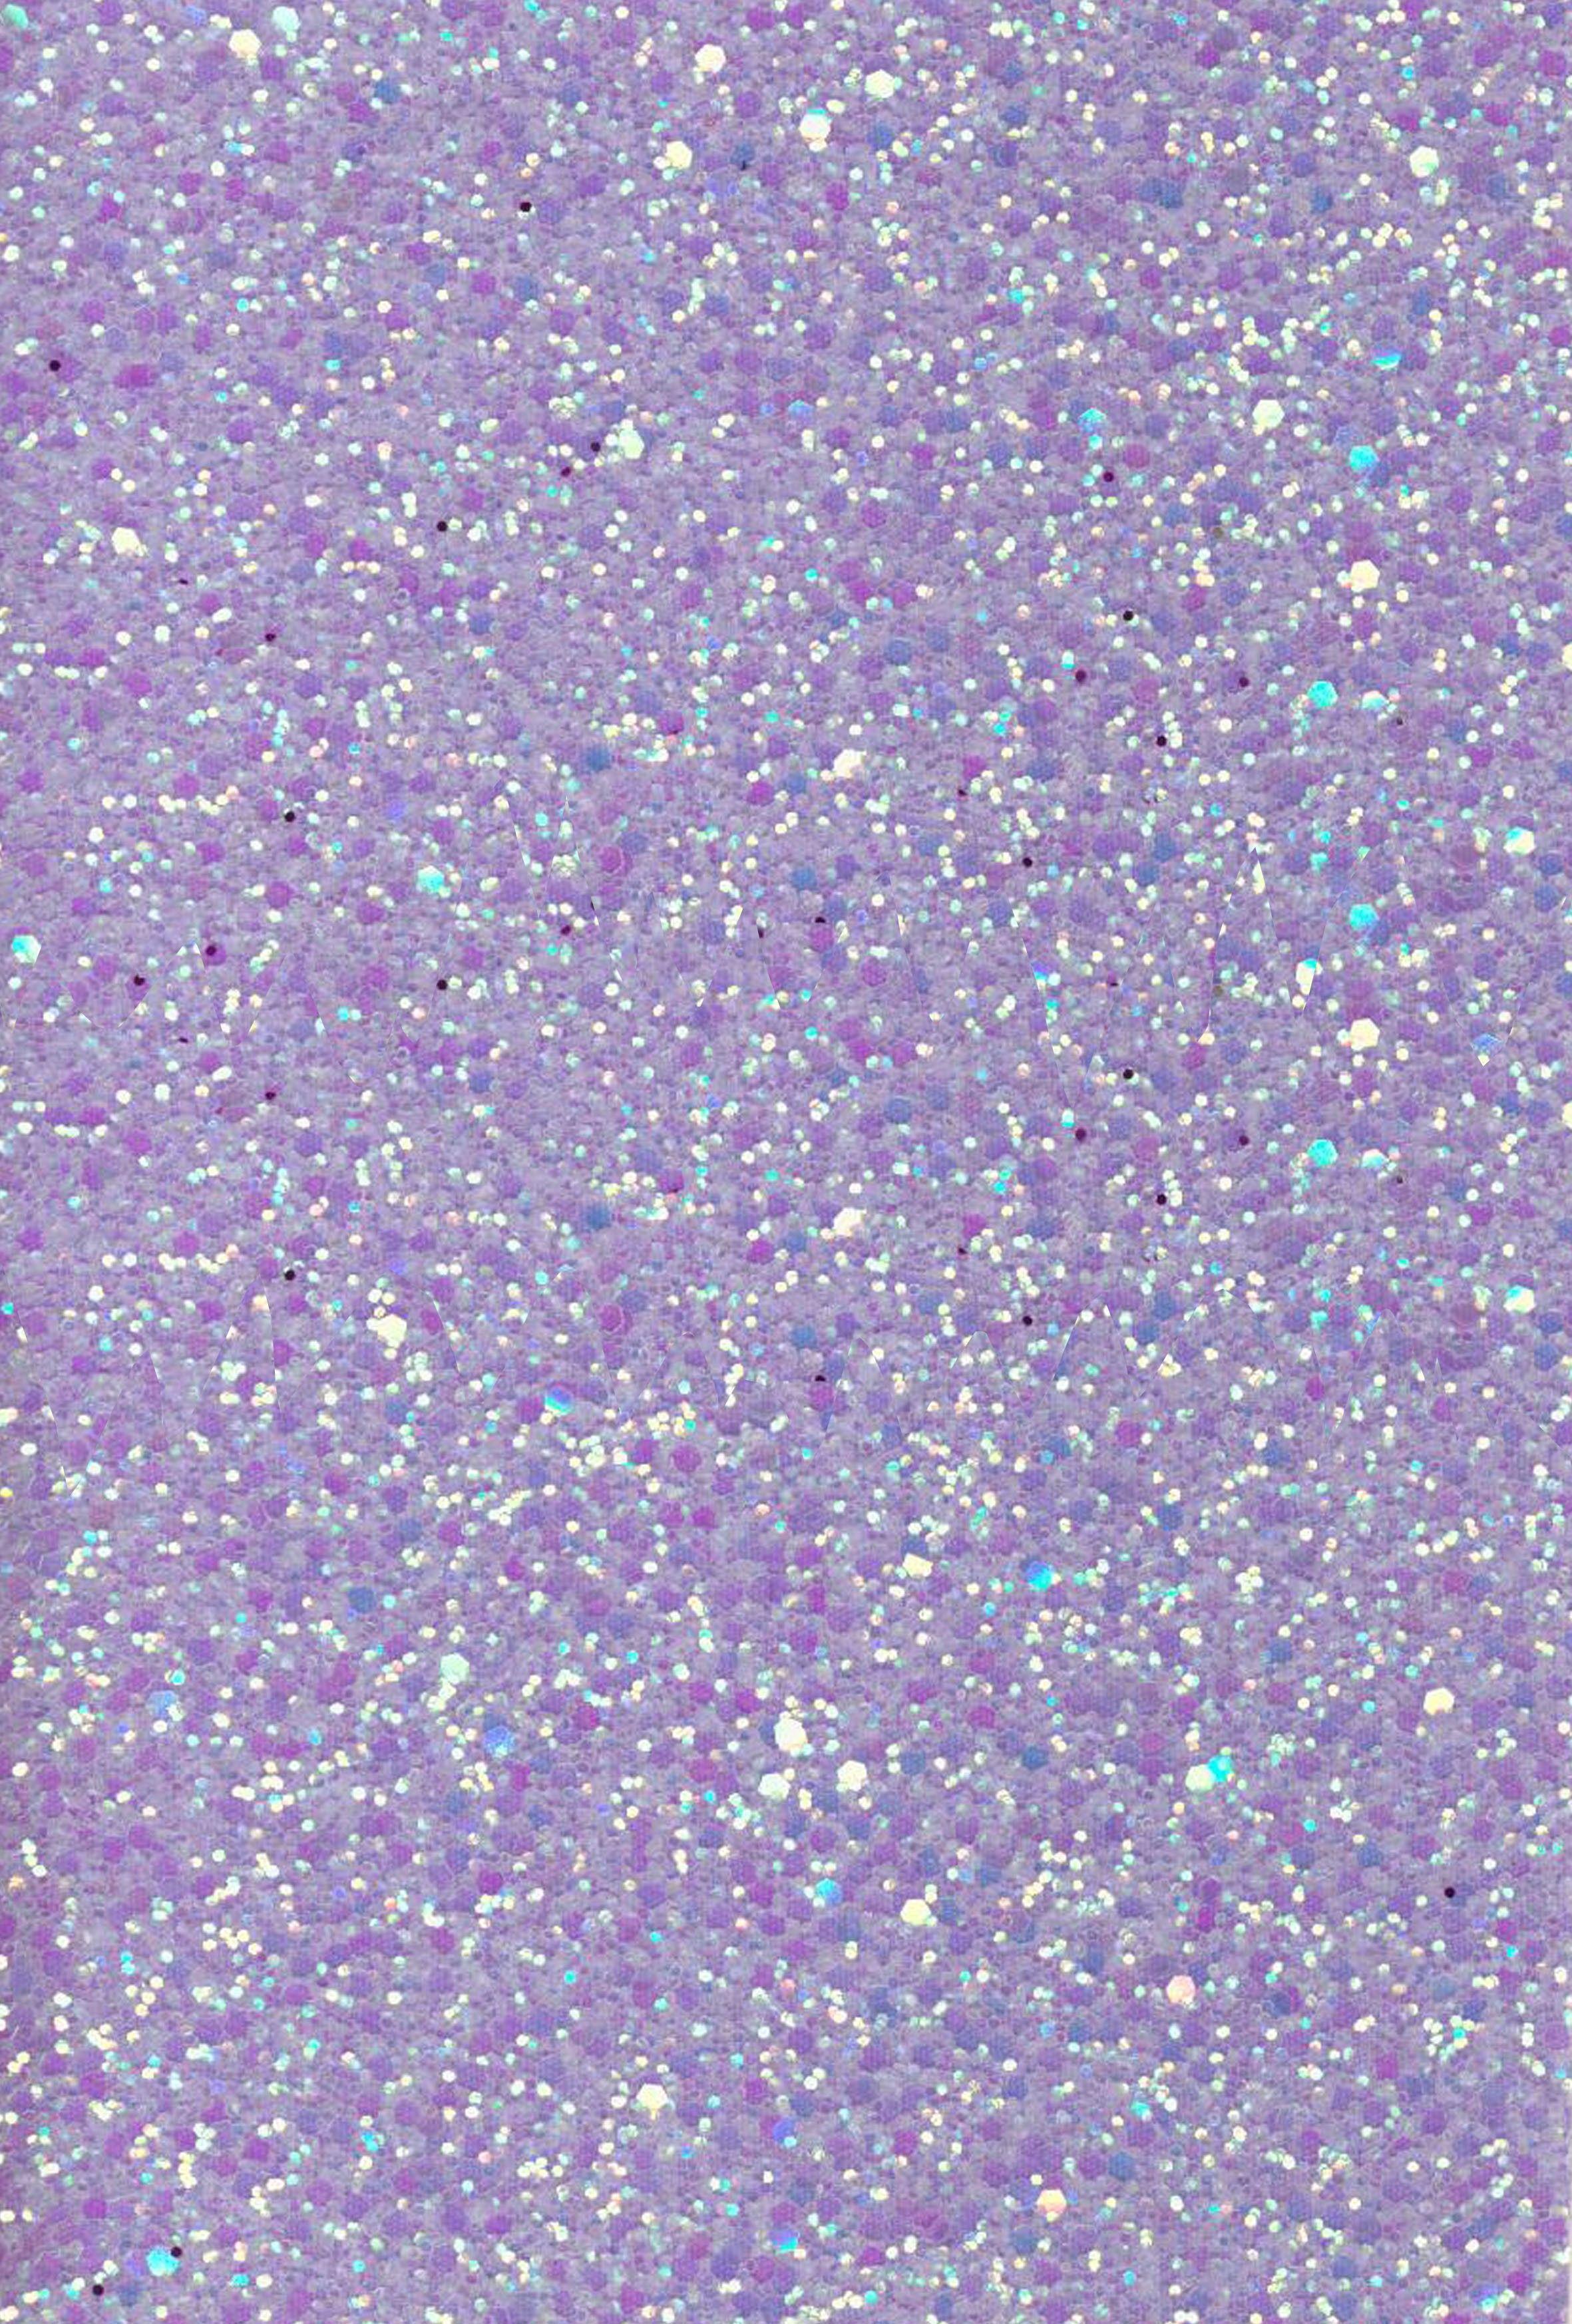 Purple Sparkle Wallpaper Light Purple Glitter Background Hd Wallpaper Backgrounds Download